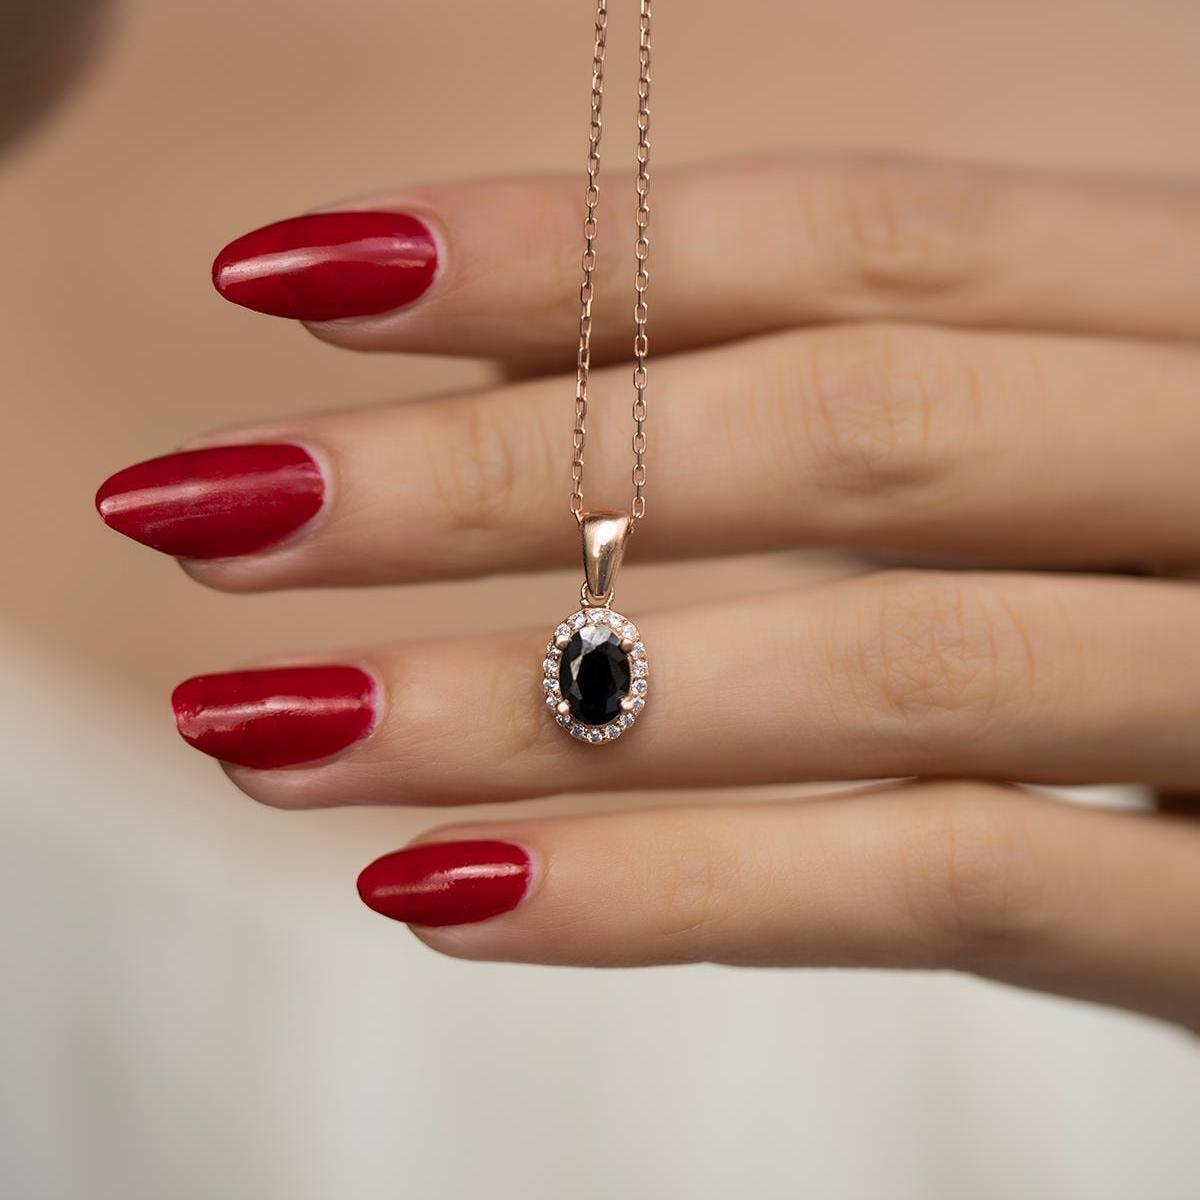 Black Cubic Zirconia Necklace • Oval Black Zirconium Necklace - Trending Silver Gifts